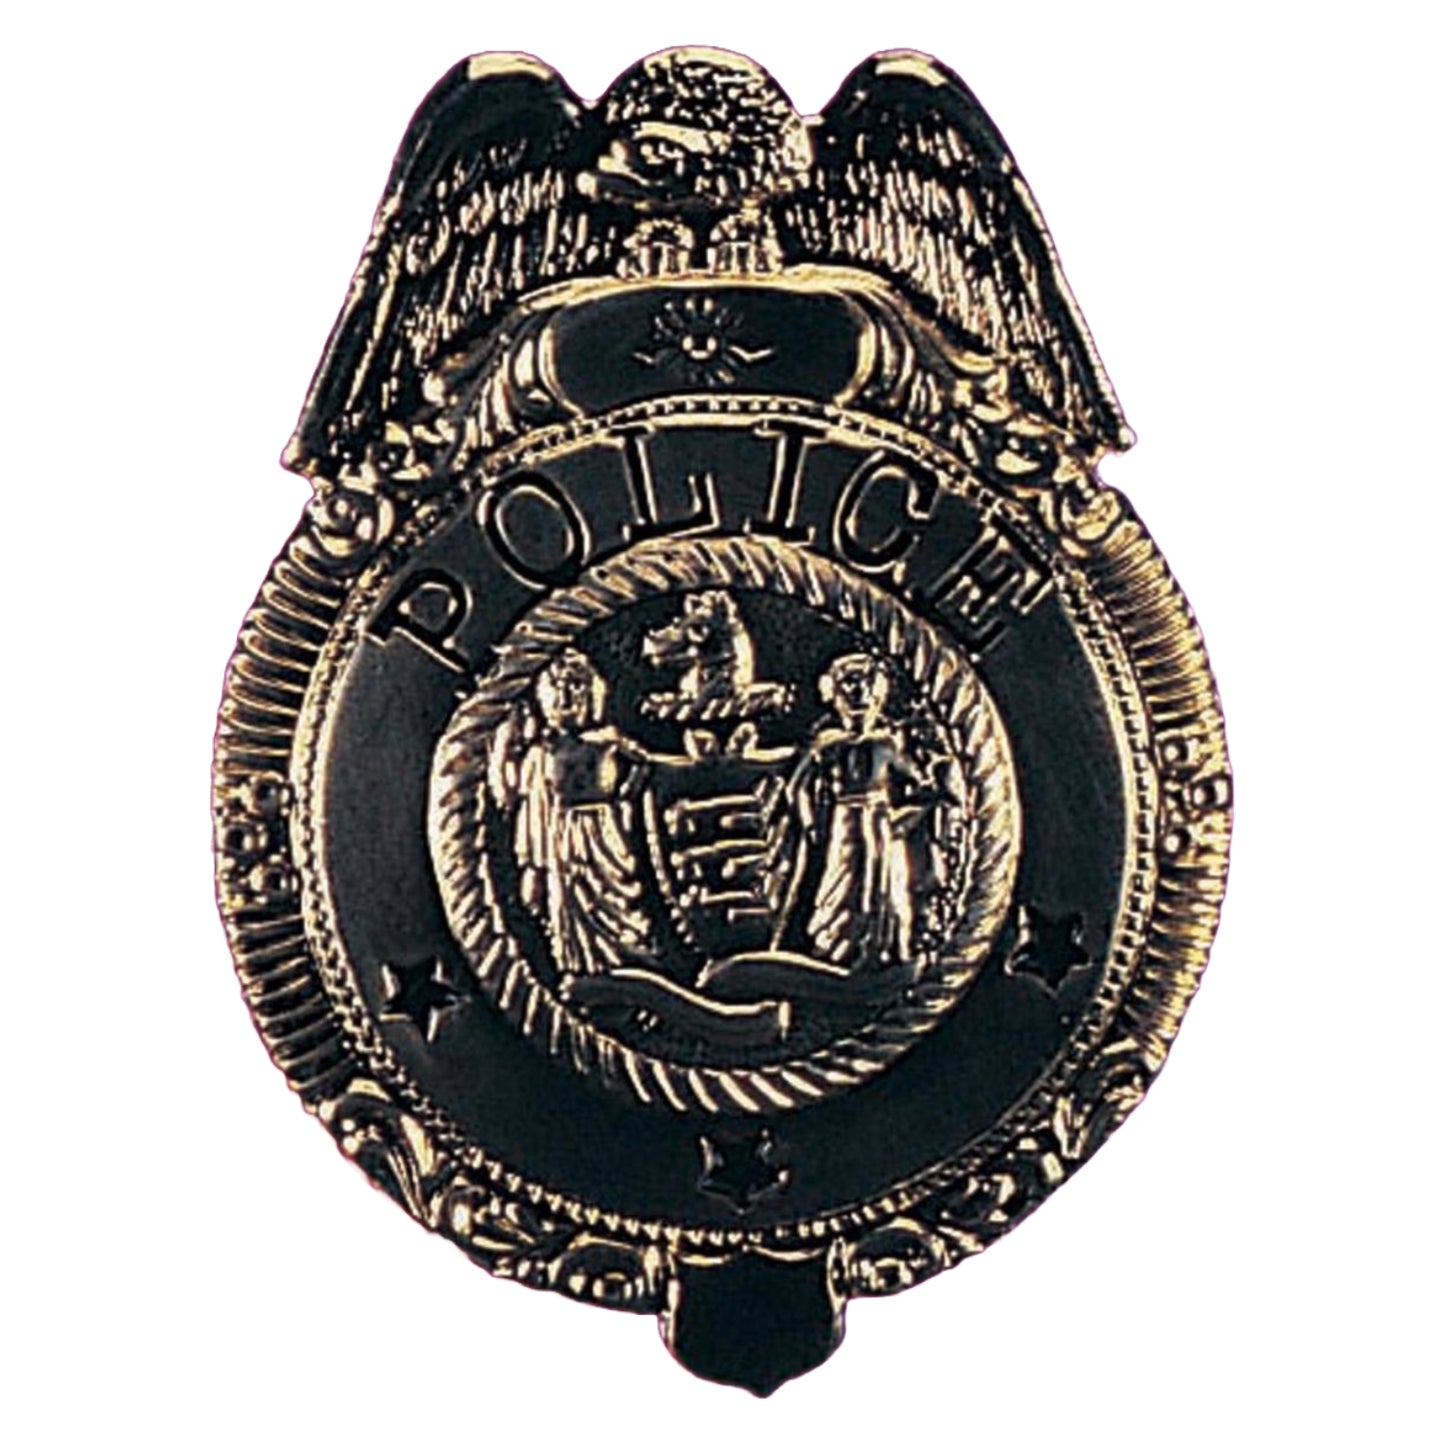 Gold Police Badge